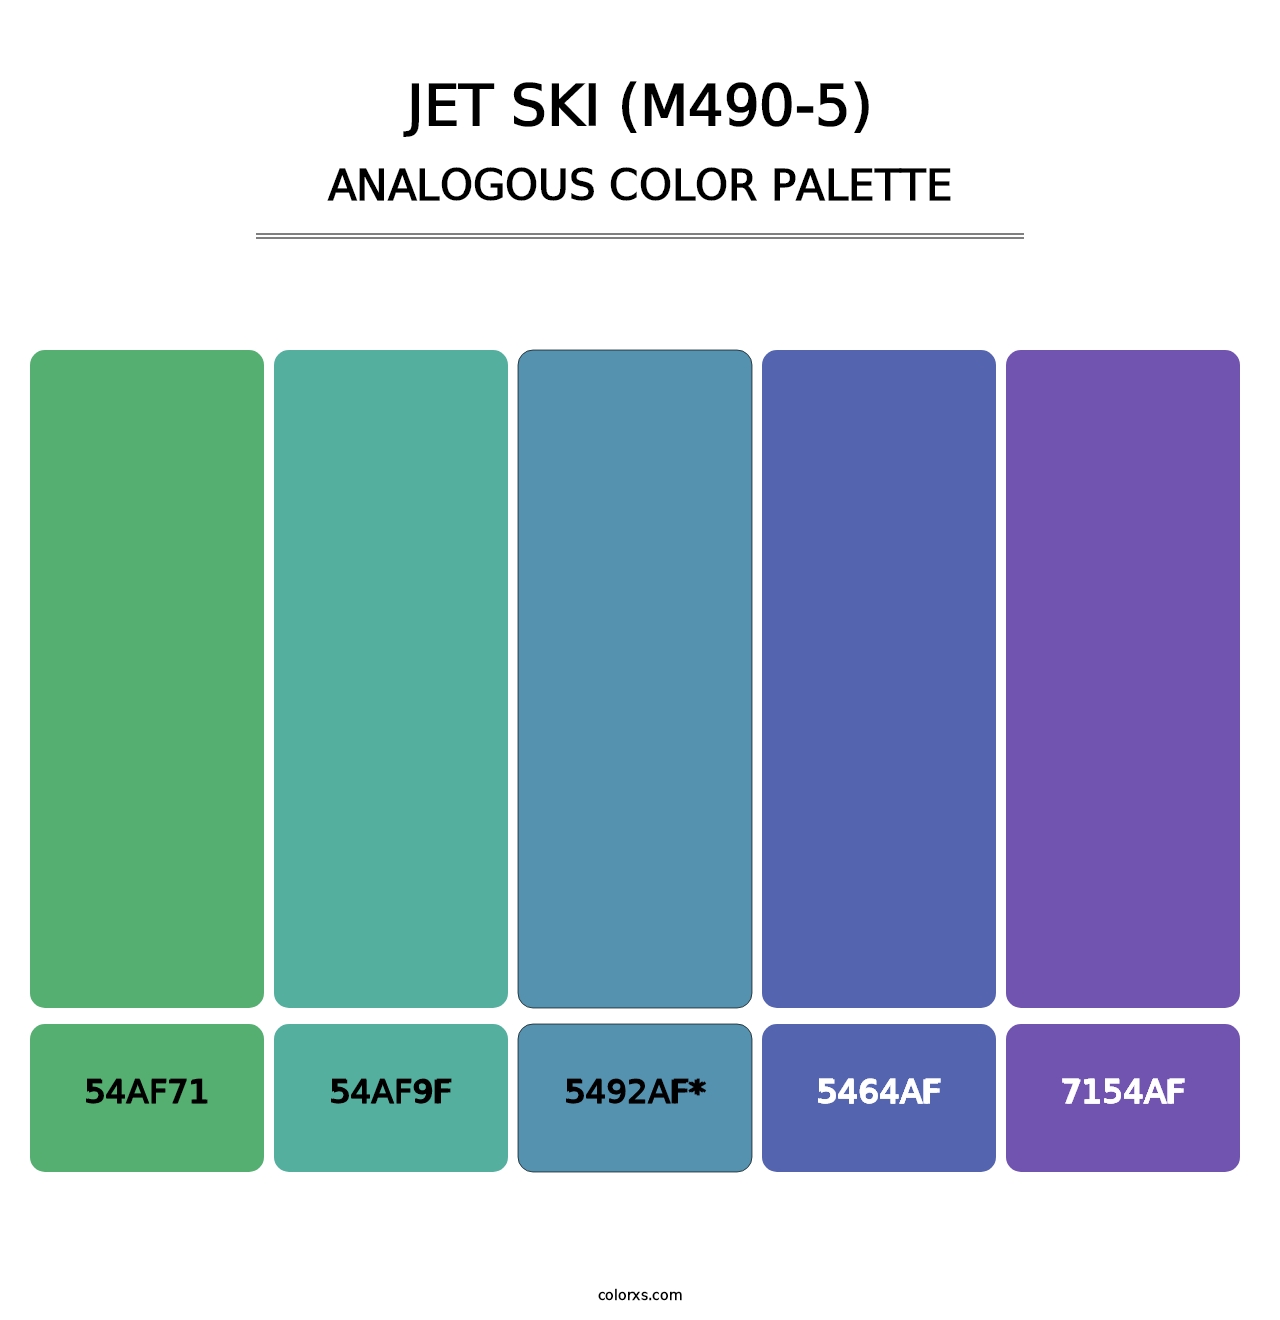 Jet Ski (M490-5) - Analogous Color Palette